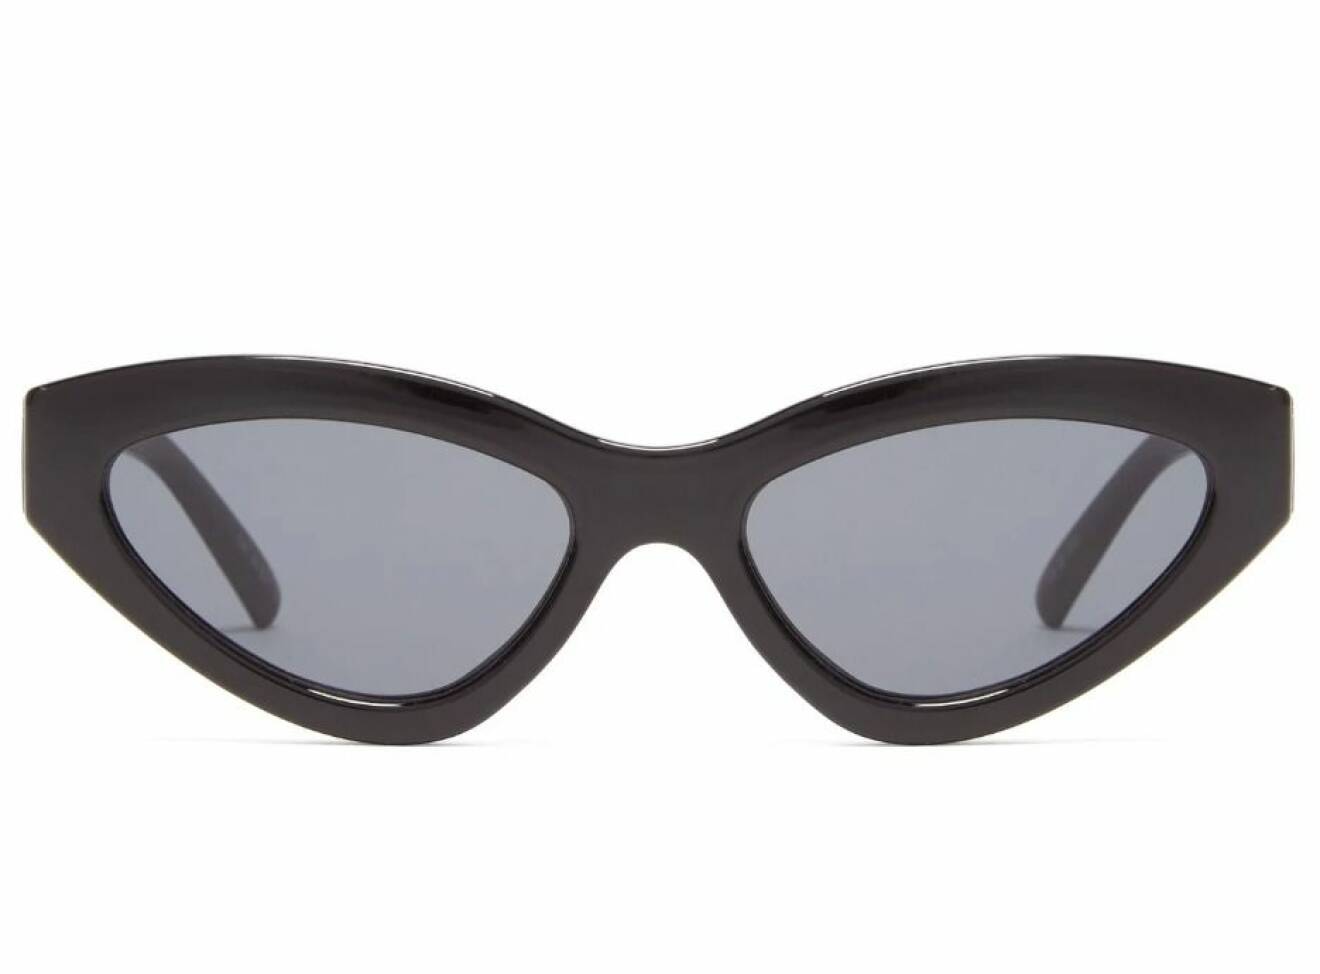 Svarta solglasögon från Le Specs.